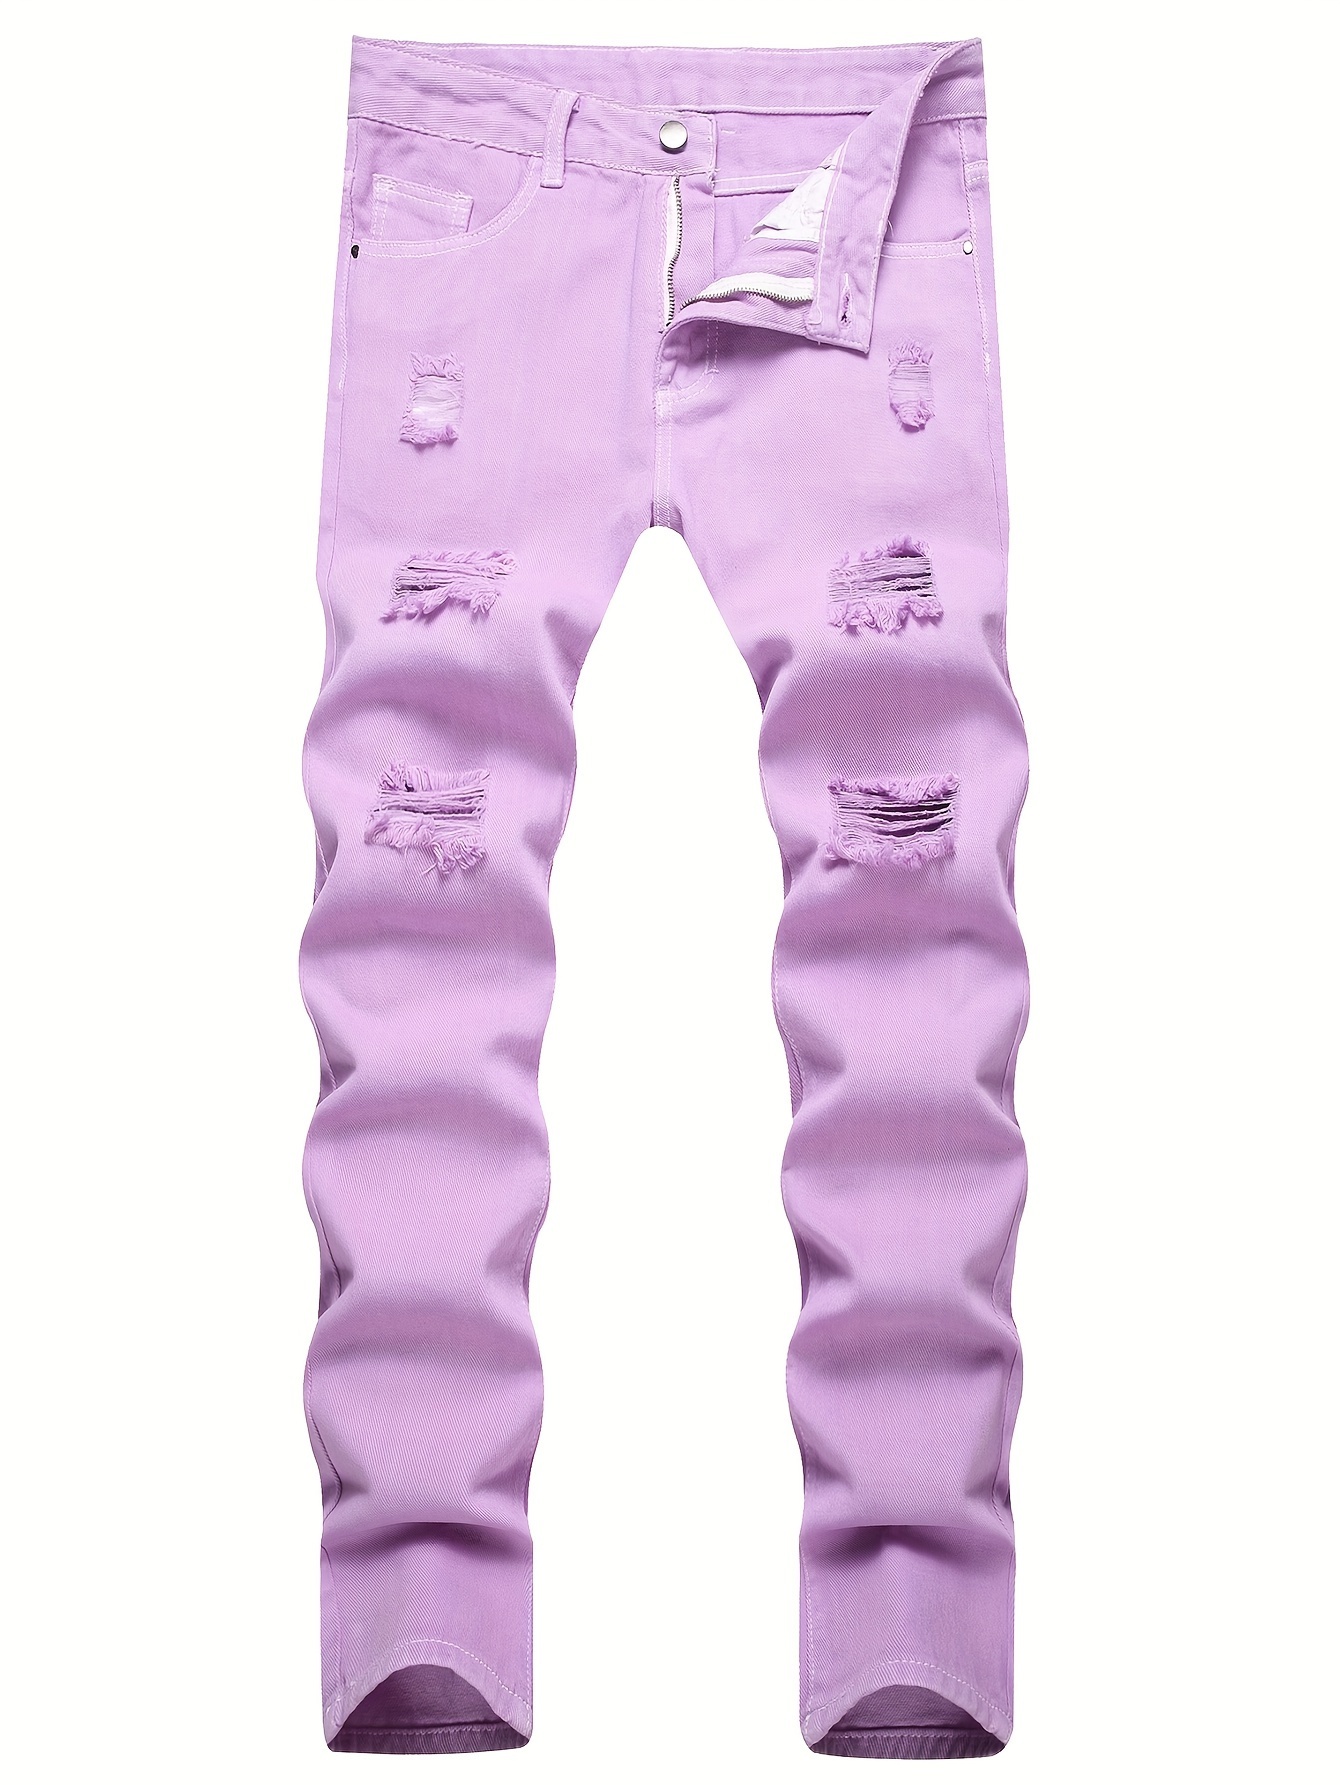 Designer PURPLE BRAND Jeans for Men Women Pants Purple Jeans Summer Hole  Hight Quality Embroidery Purple Jean Denim Trousers Mens Purple Jeans  Fashion